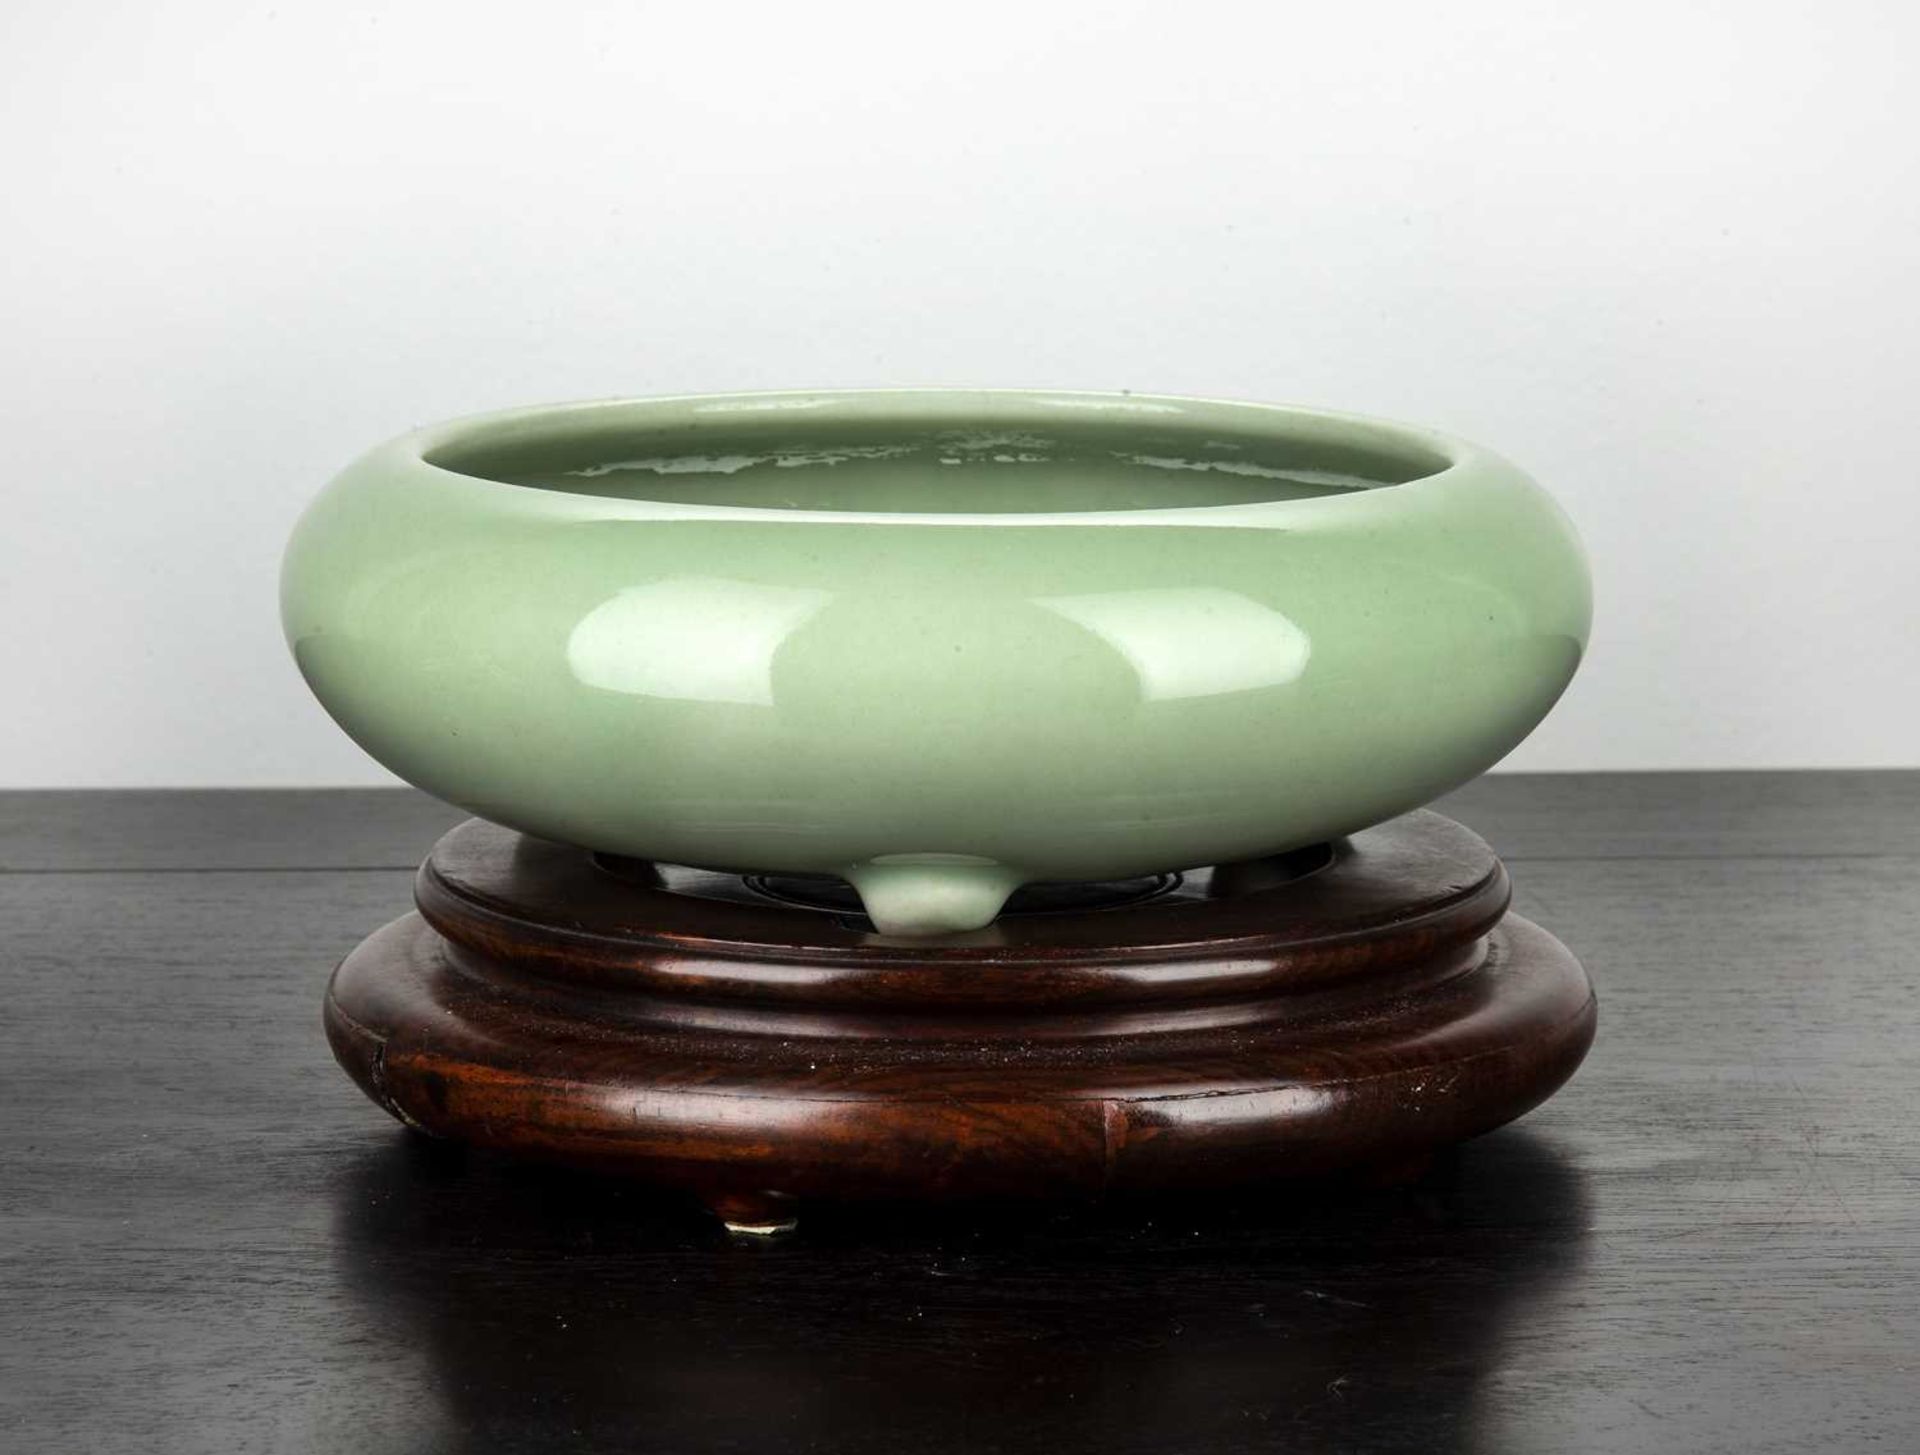 Plain celadon porcelain glazed shallow bowl Chinese, 18th/19th Century with inward turning rounded